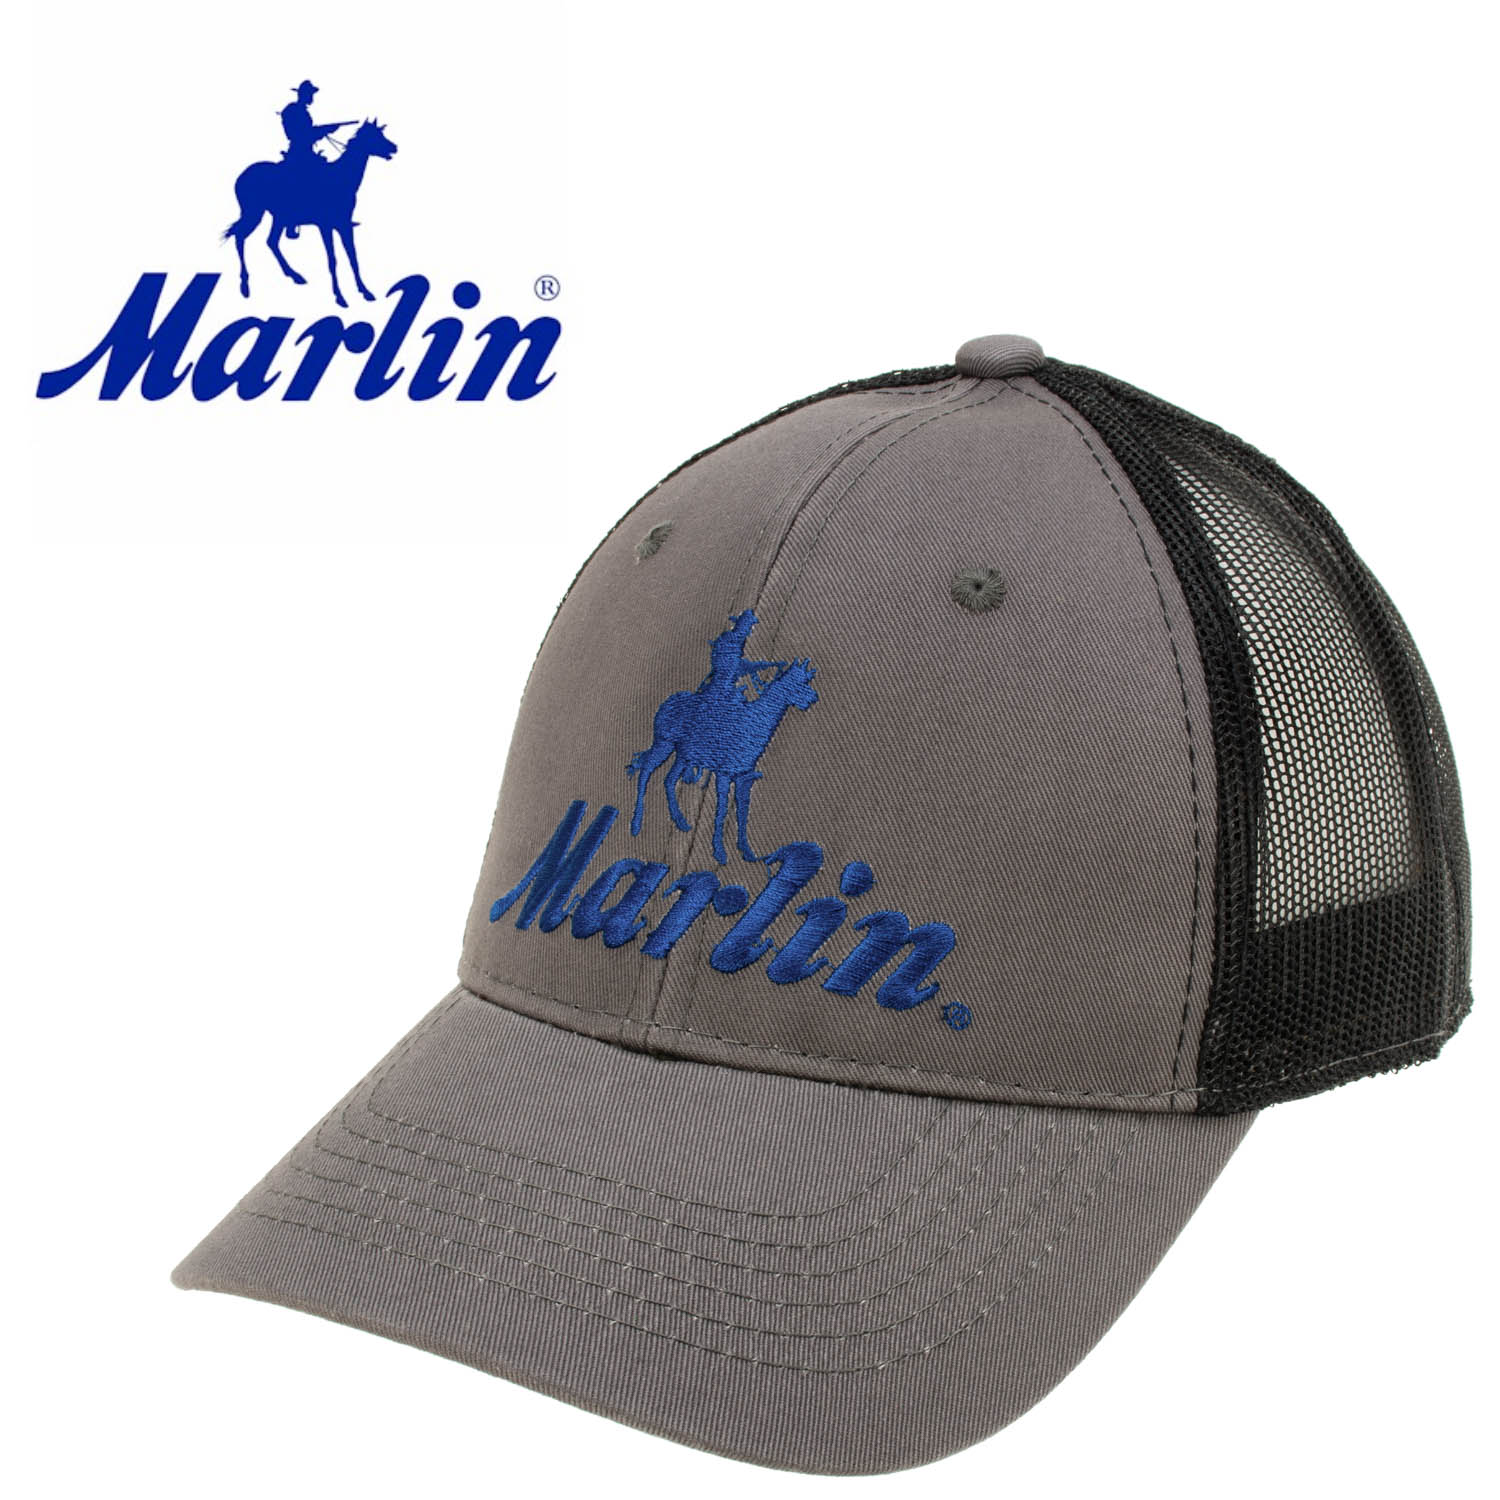 Marlin Charcoal, Black & Blue Mesh Cap: MGW